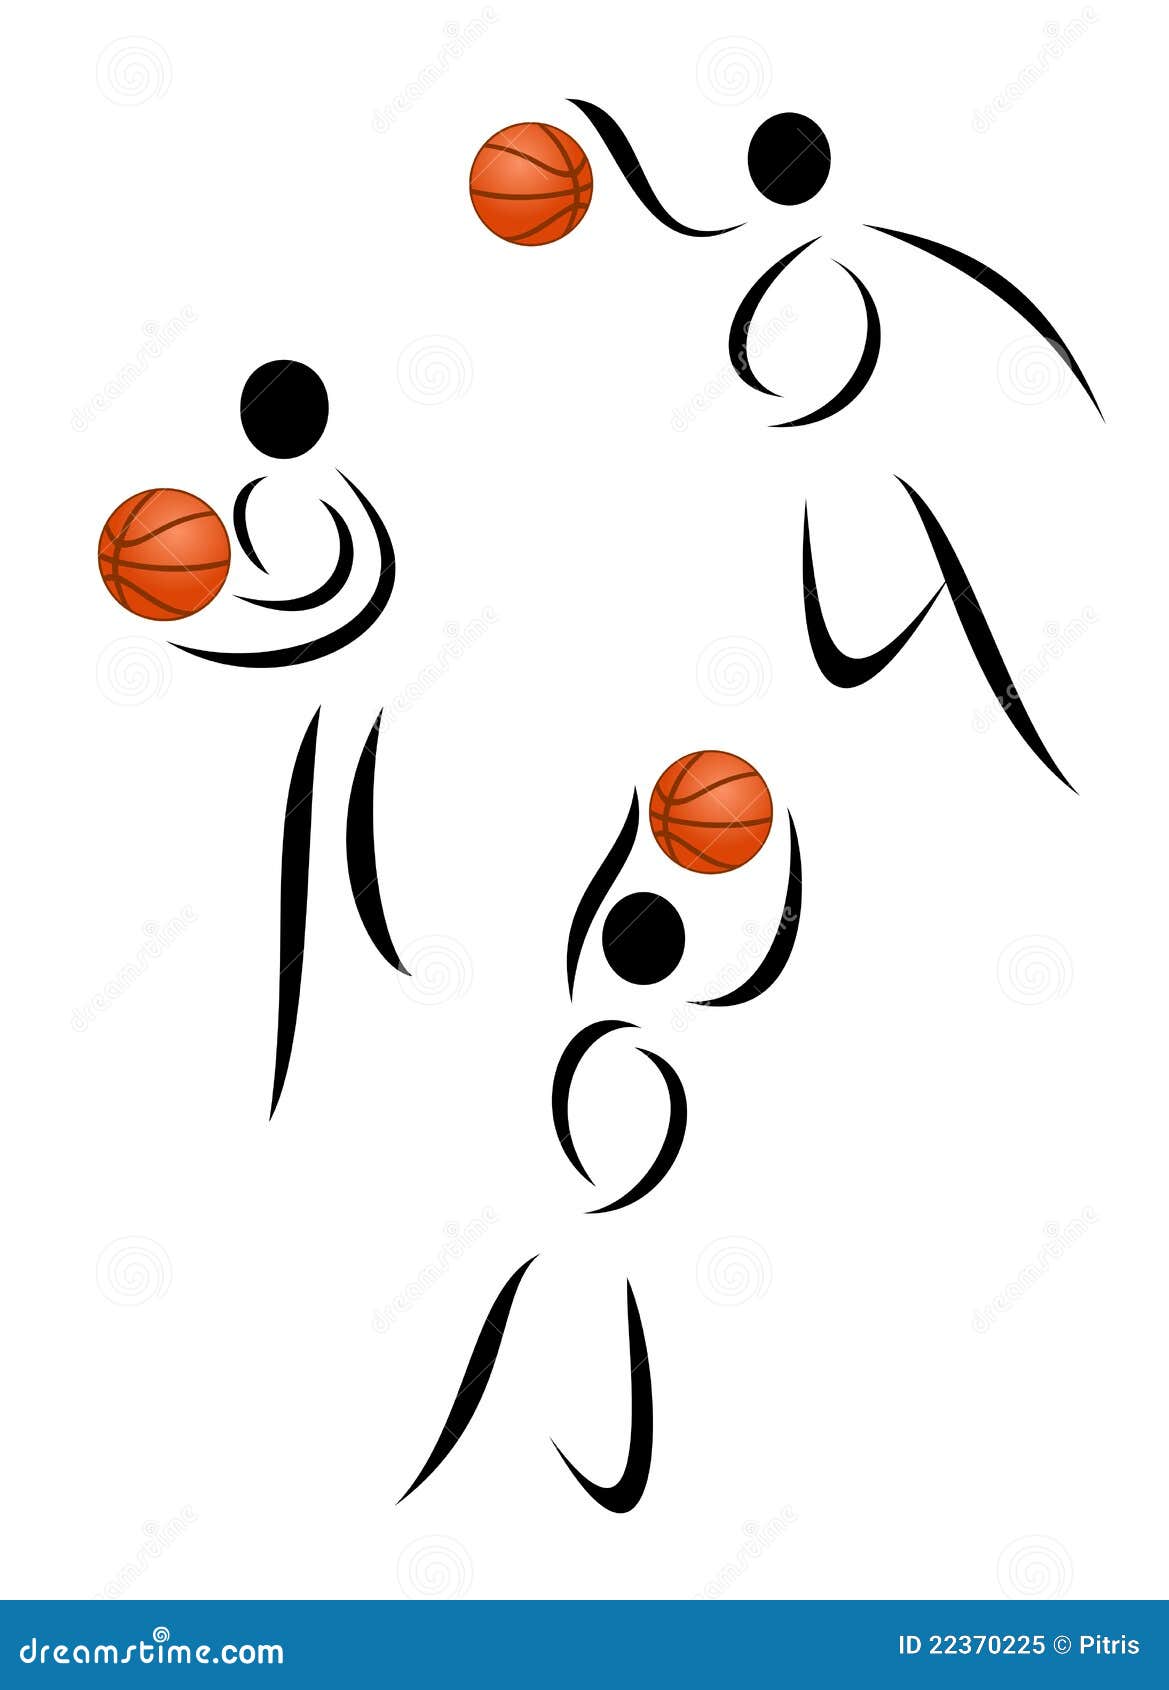 Sport basketball symbol stock vector. Illustration of single - 22370225